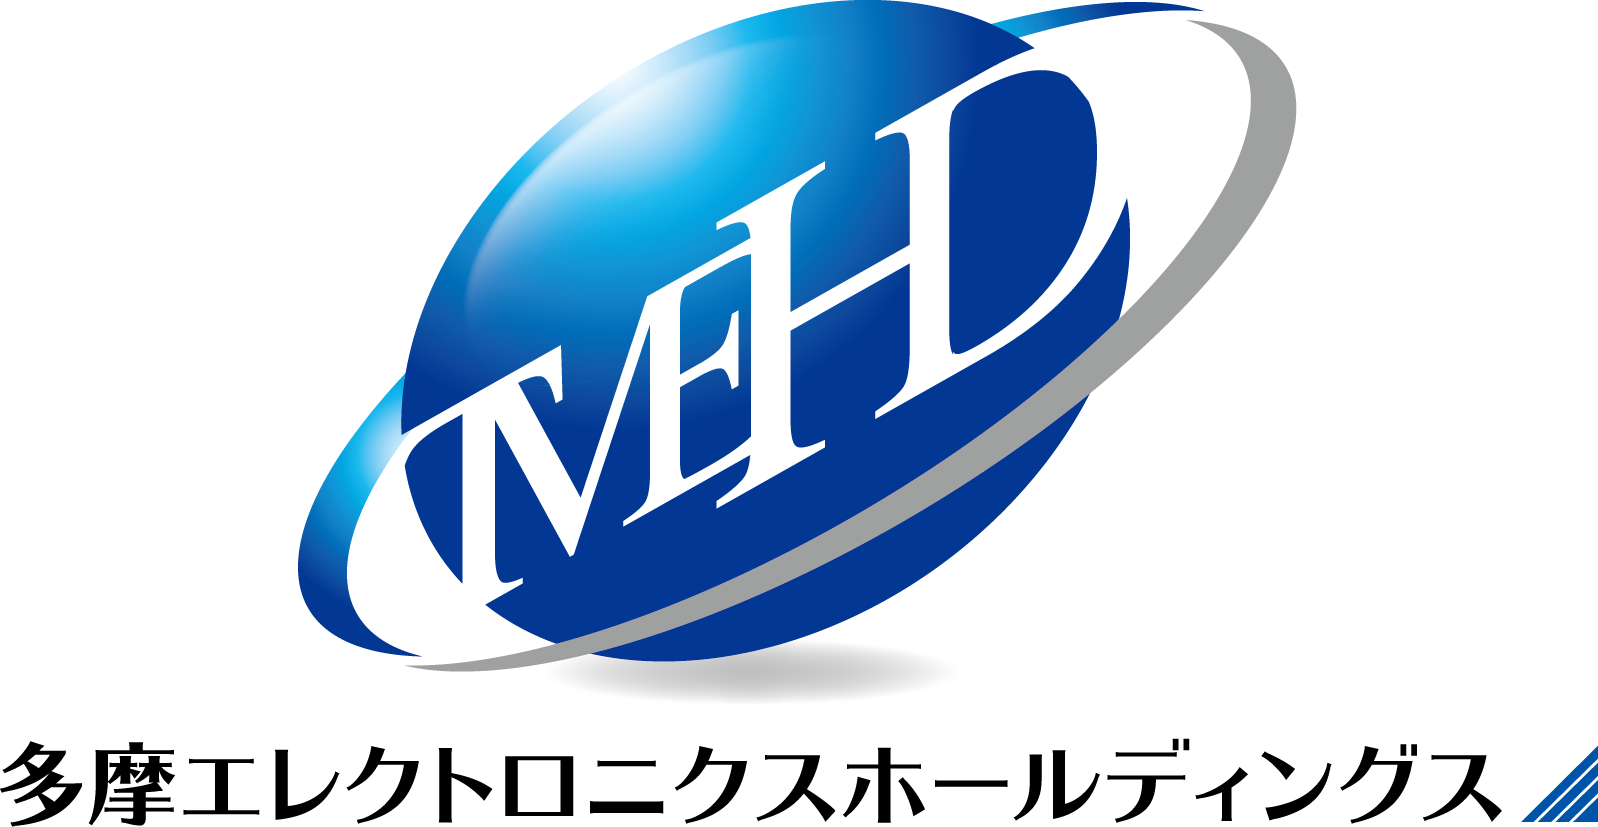 TMEHD_logo.png